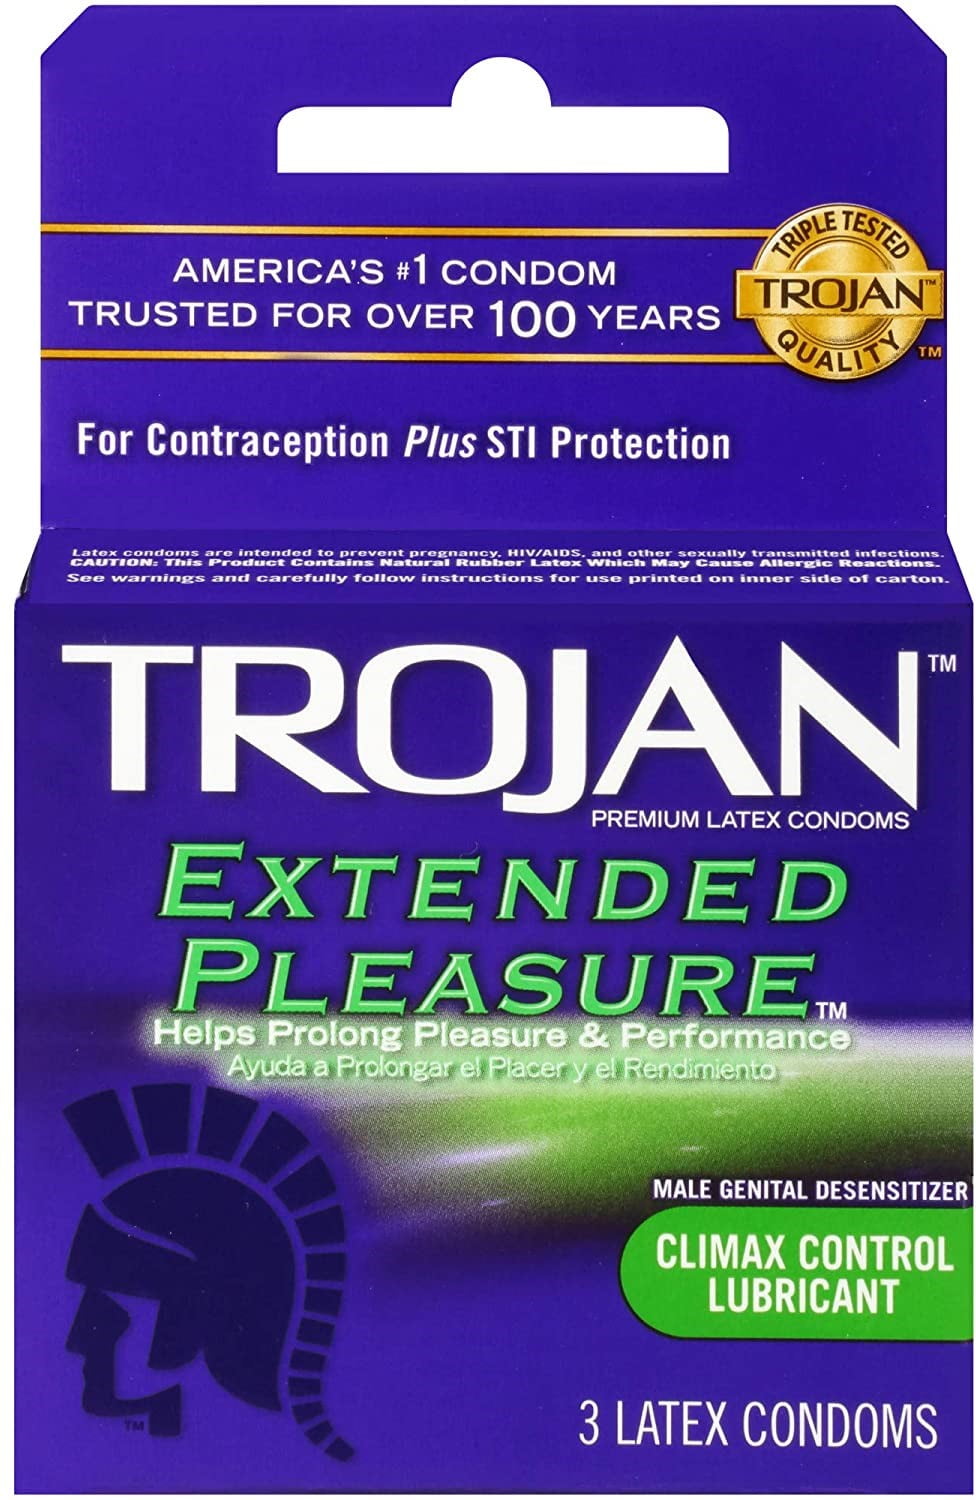 Pleasure condoms review trojan extended Top 10